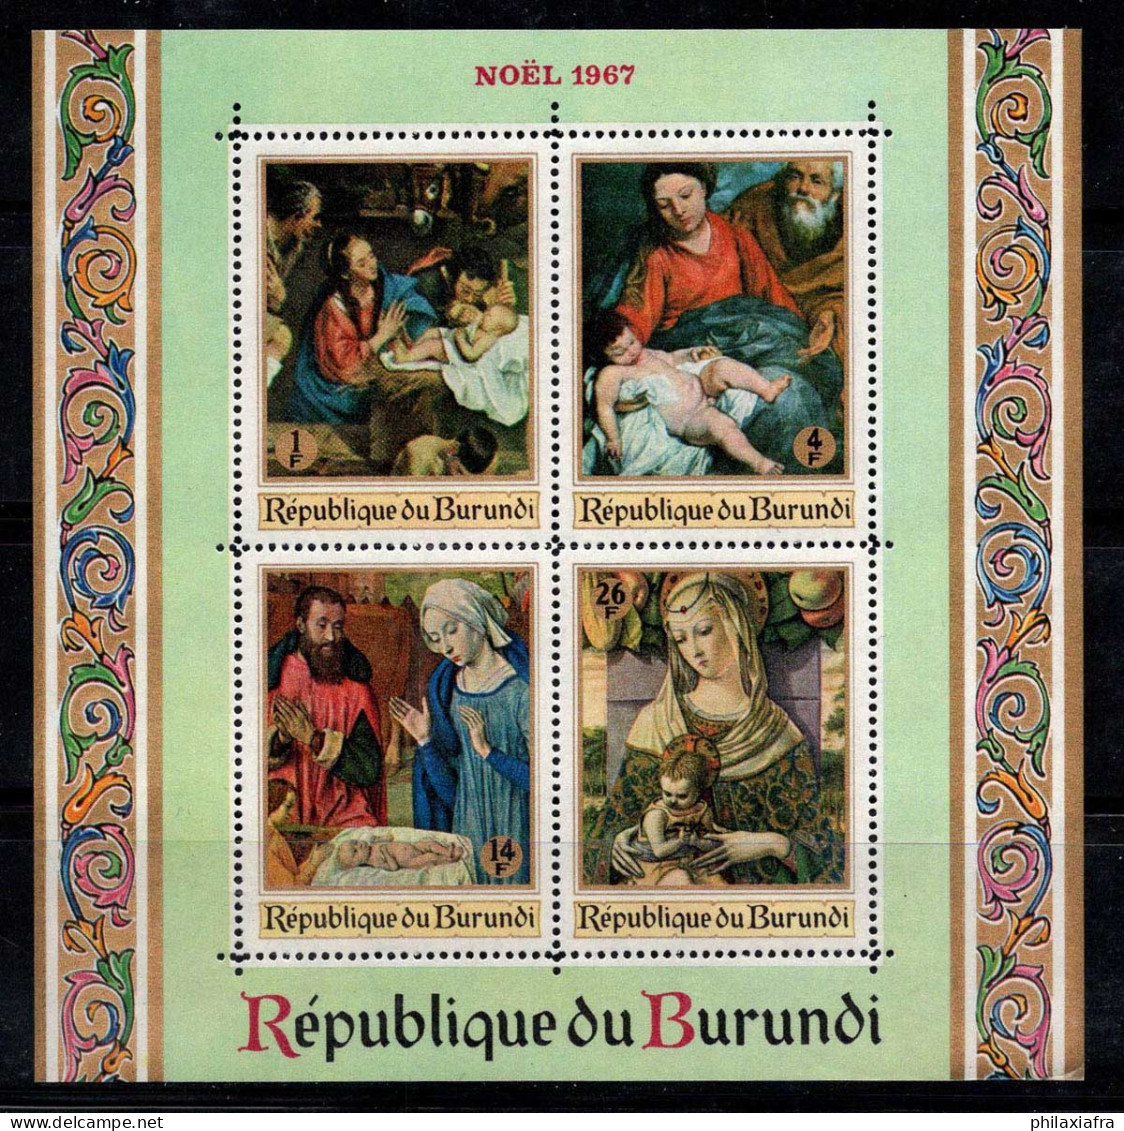 Burundi 1967 SG MS337 Bloc Feuillet 100% Neuf ** Noël, Peintures Religieuses - Nuevos